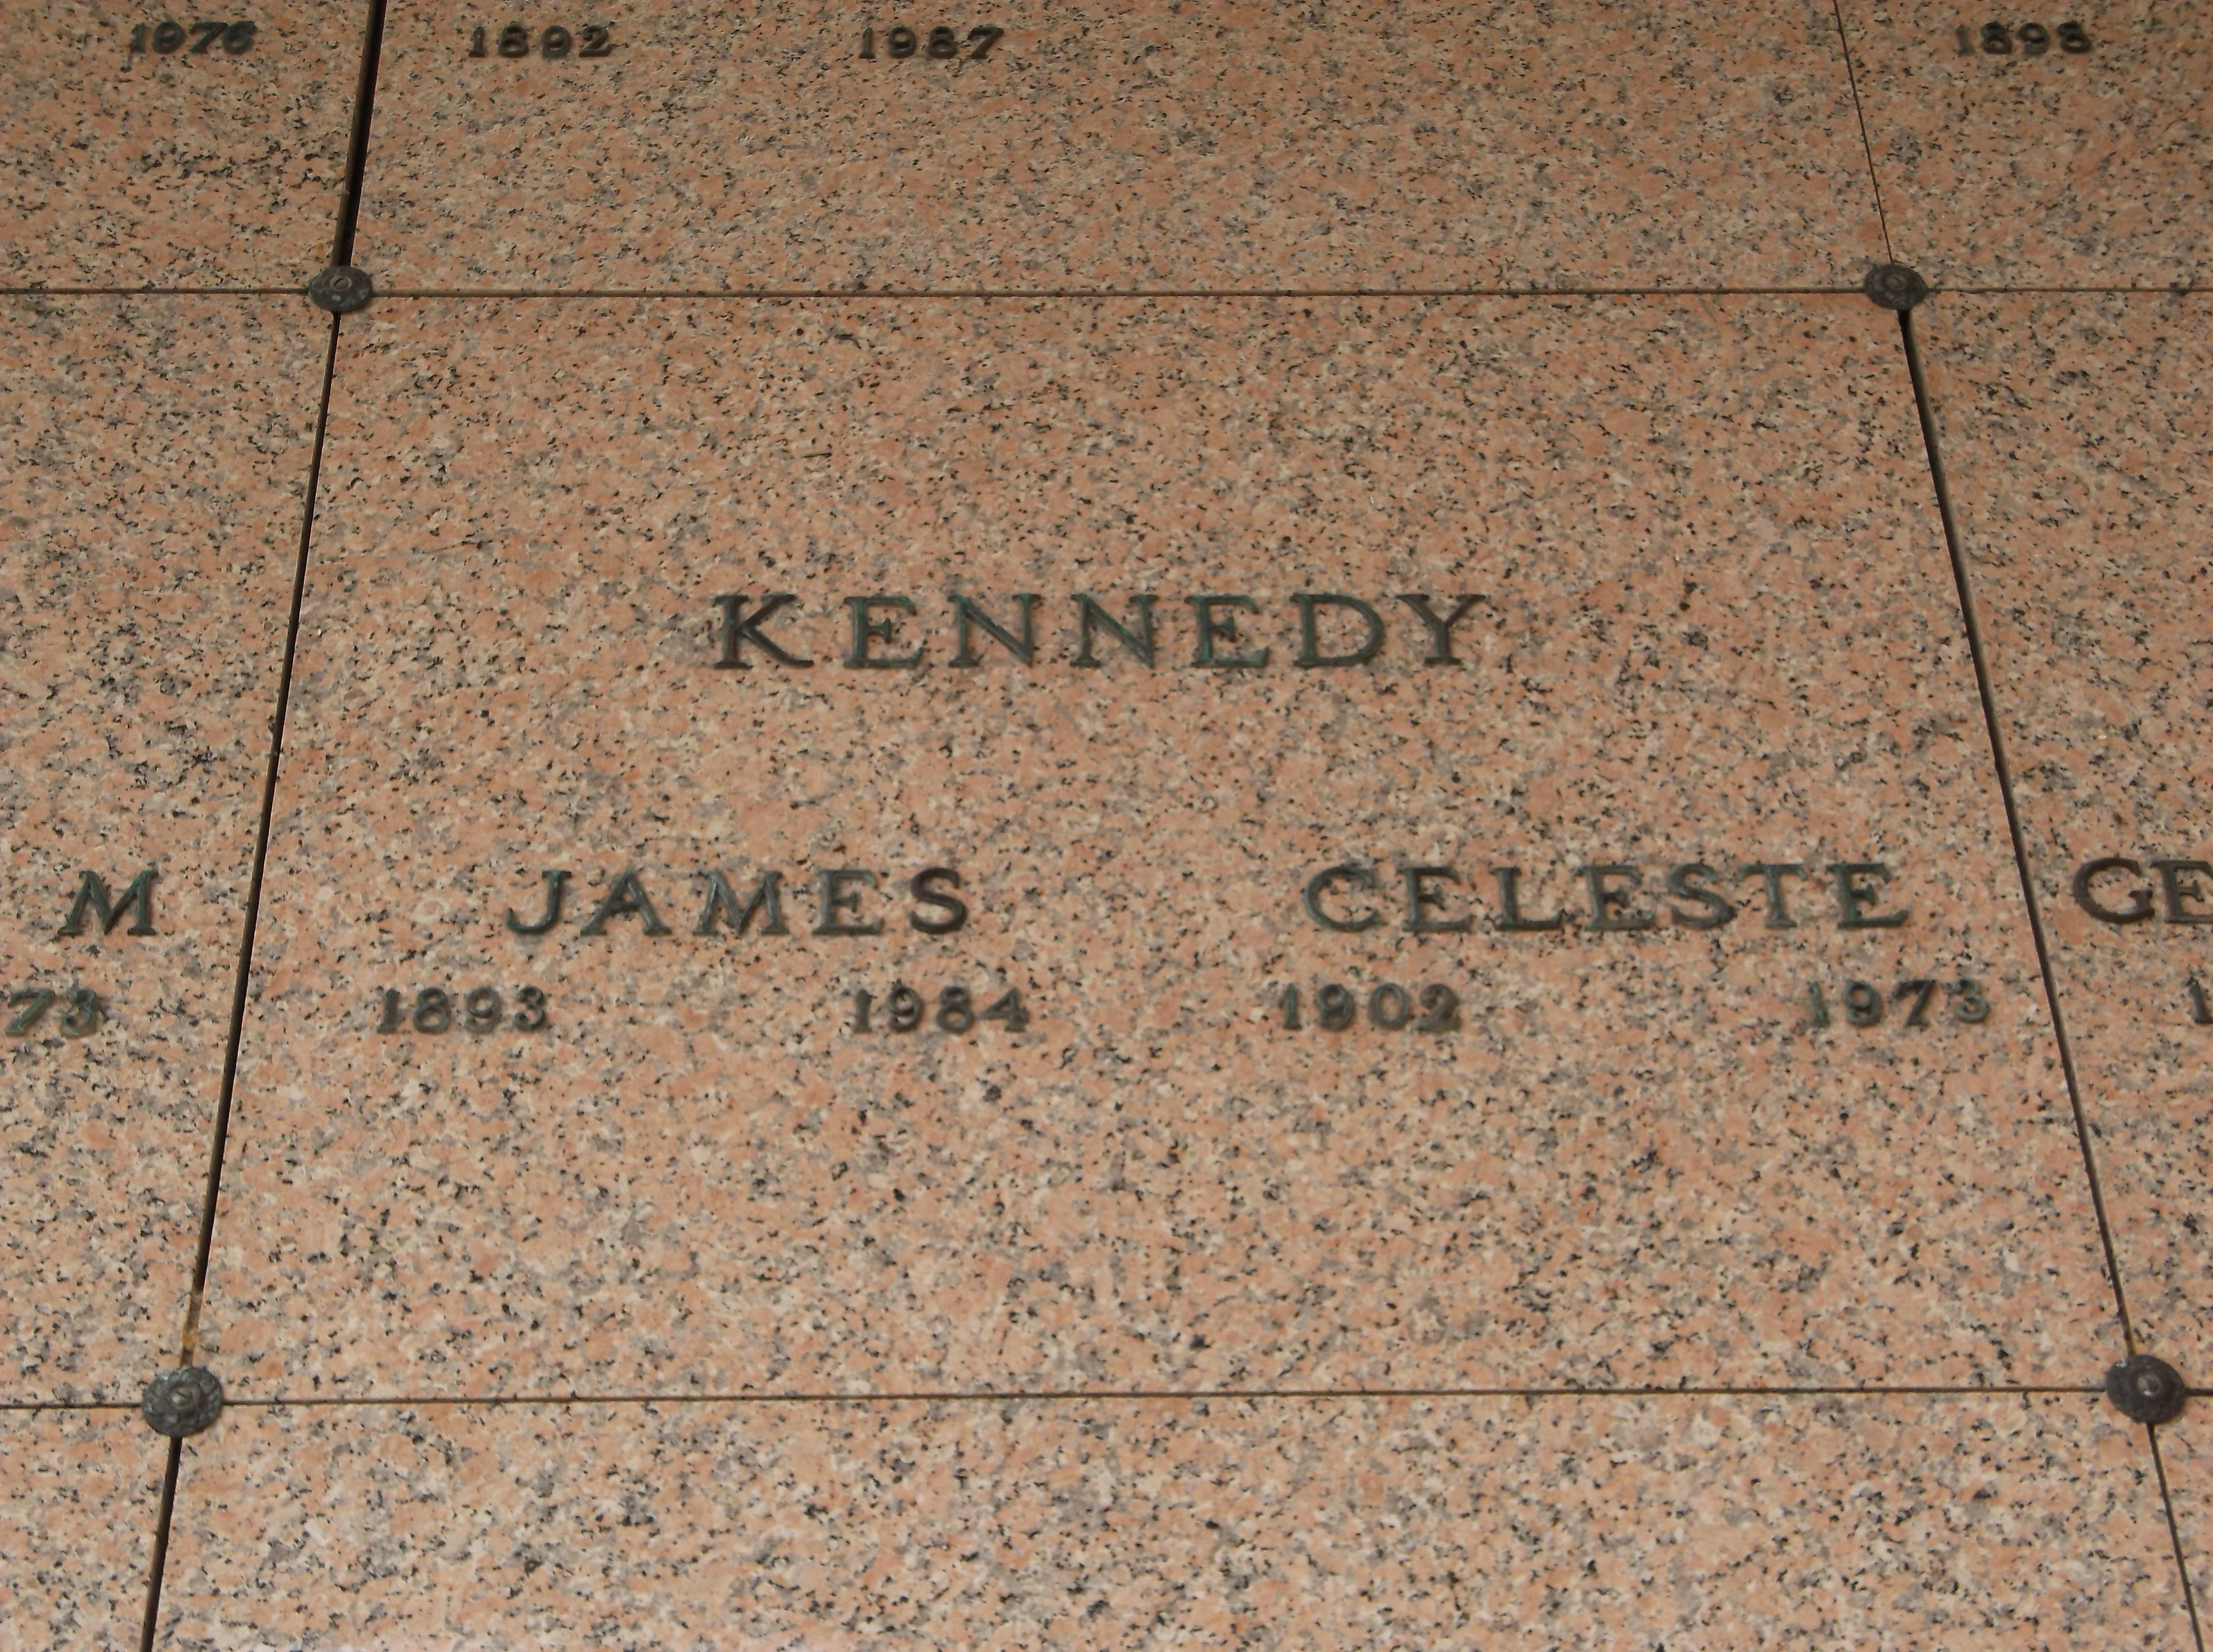 James Kennedy